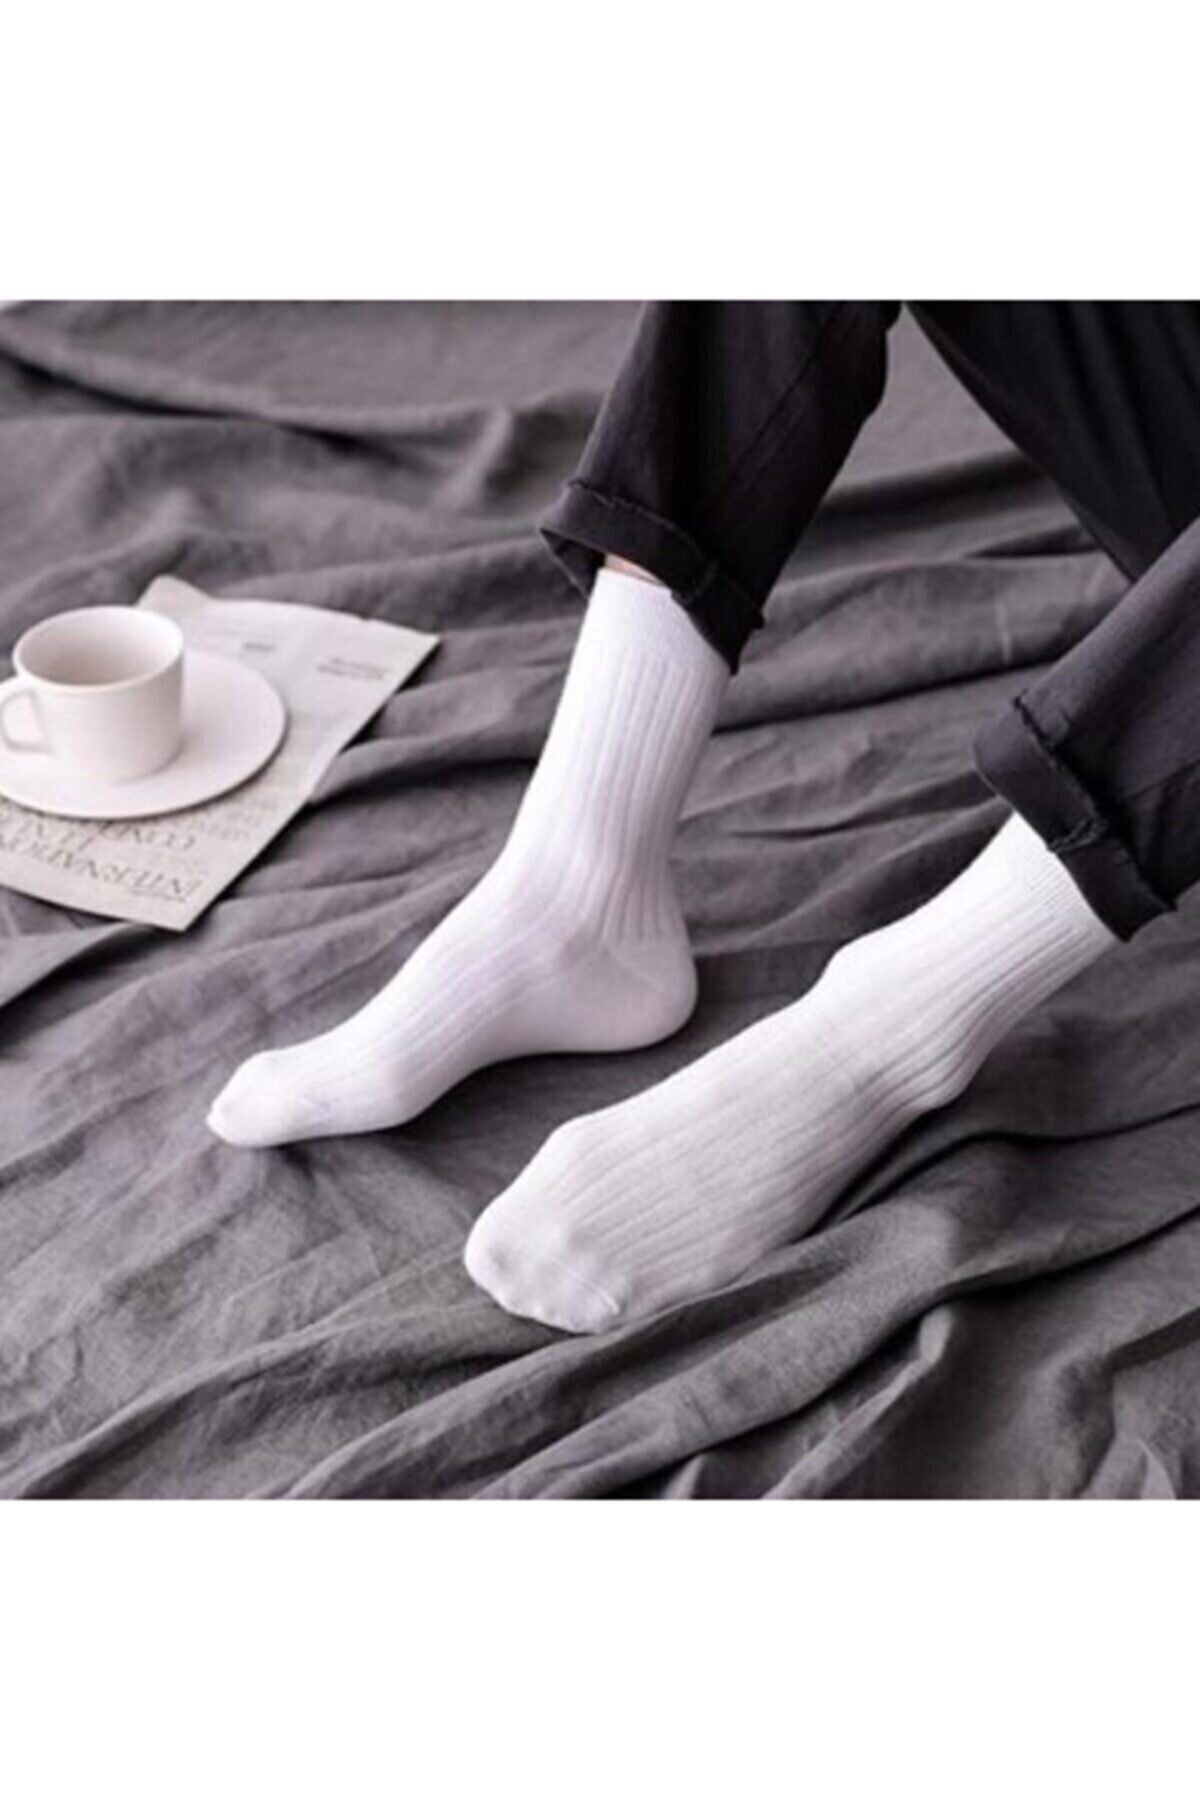 Crazy Socks Beyaz Tenis Çorap 6'lı 40/45 No